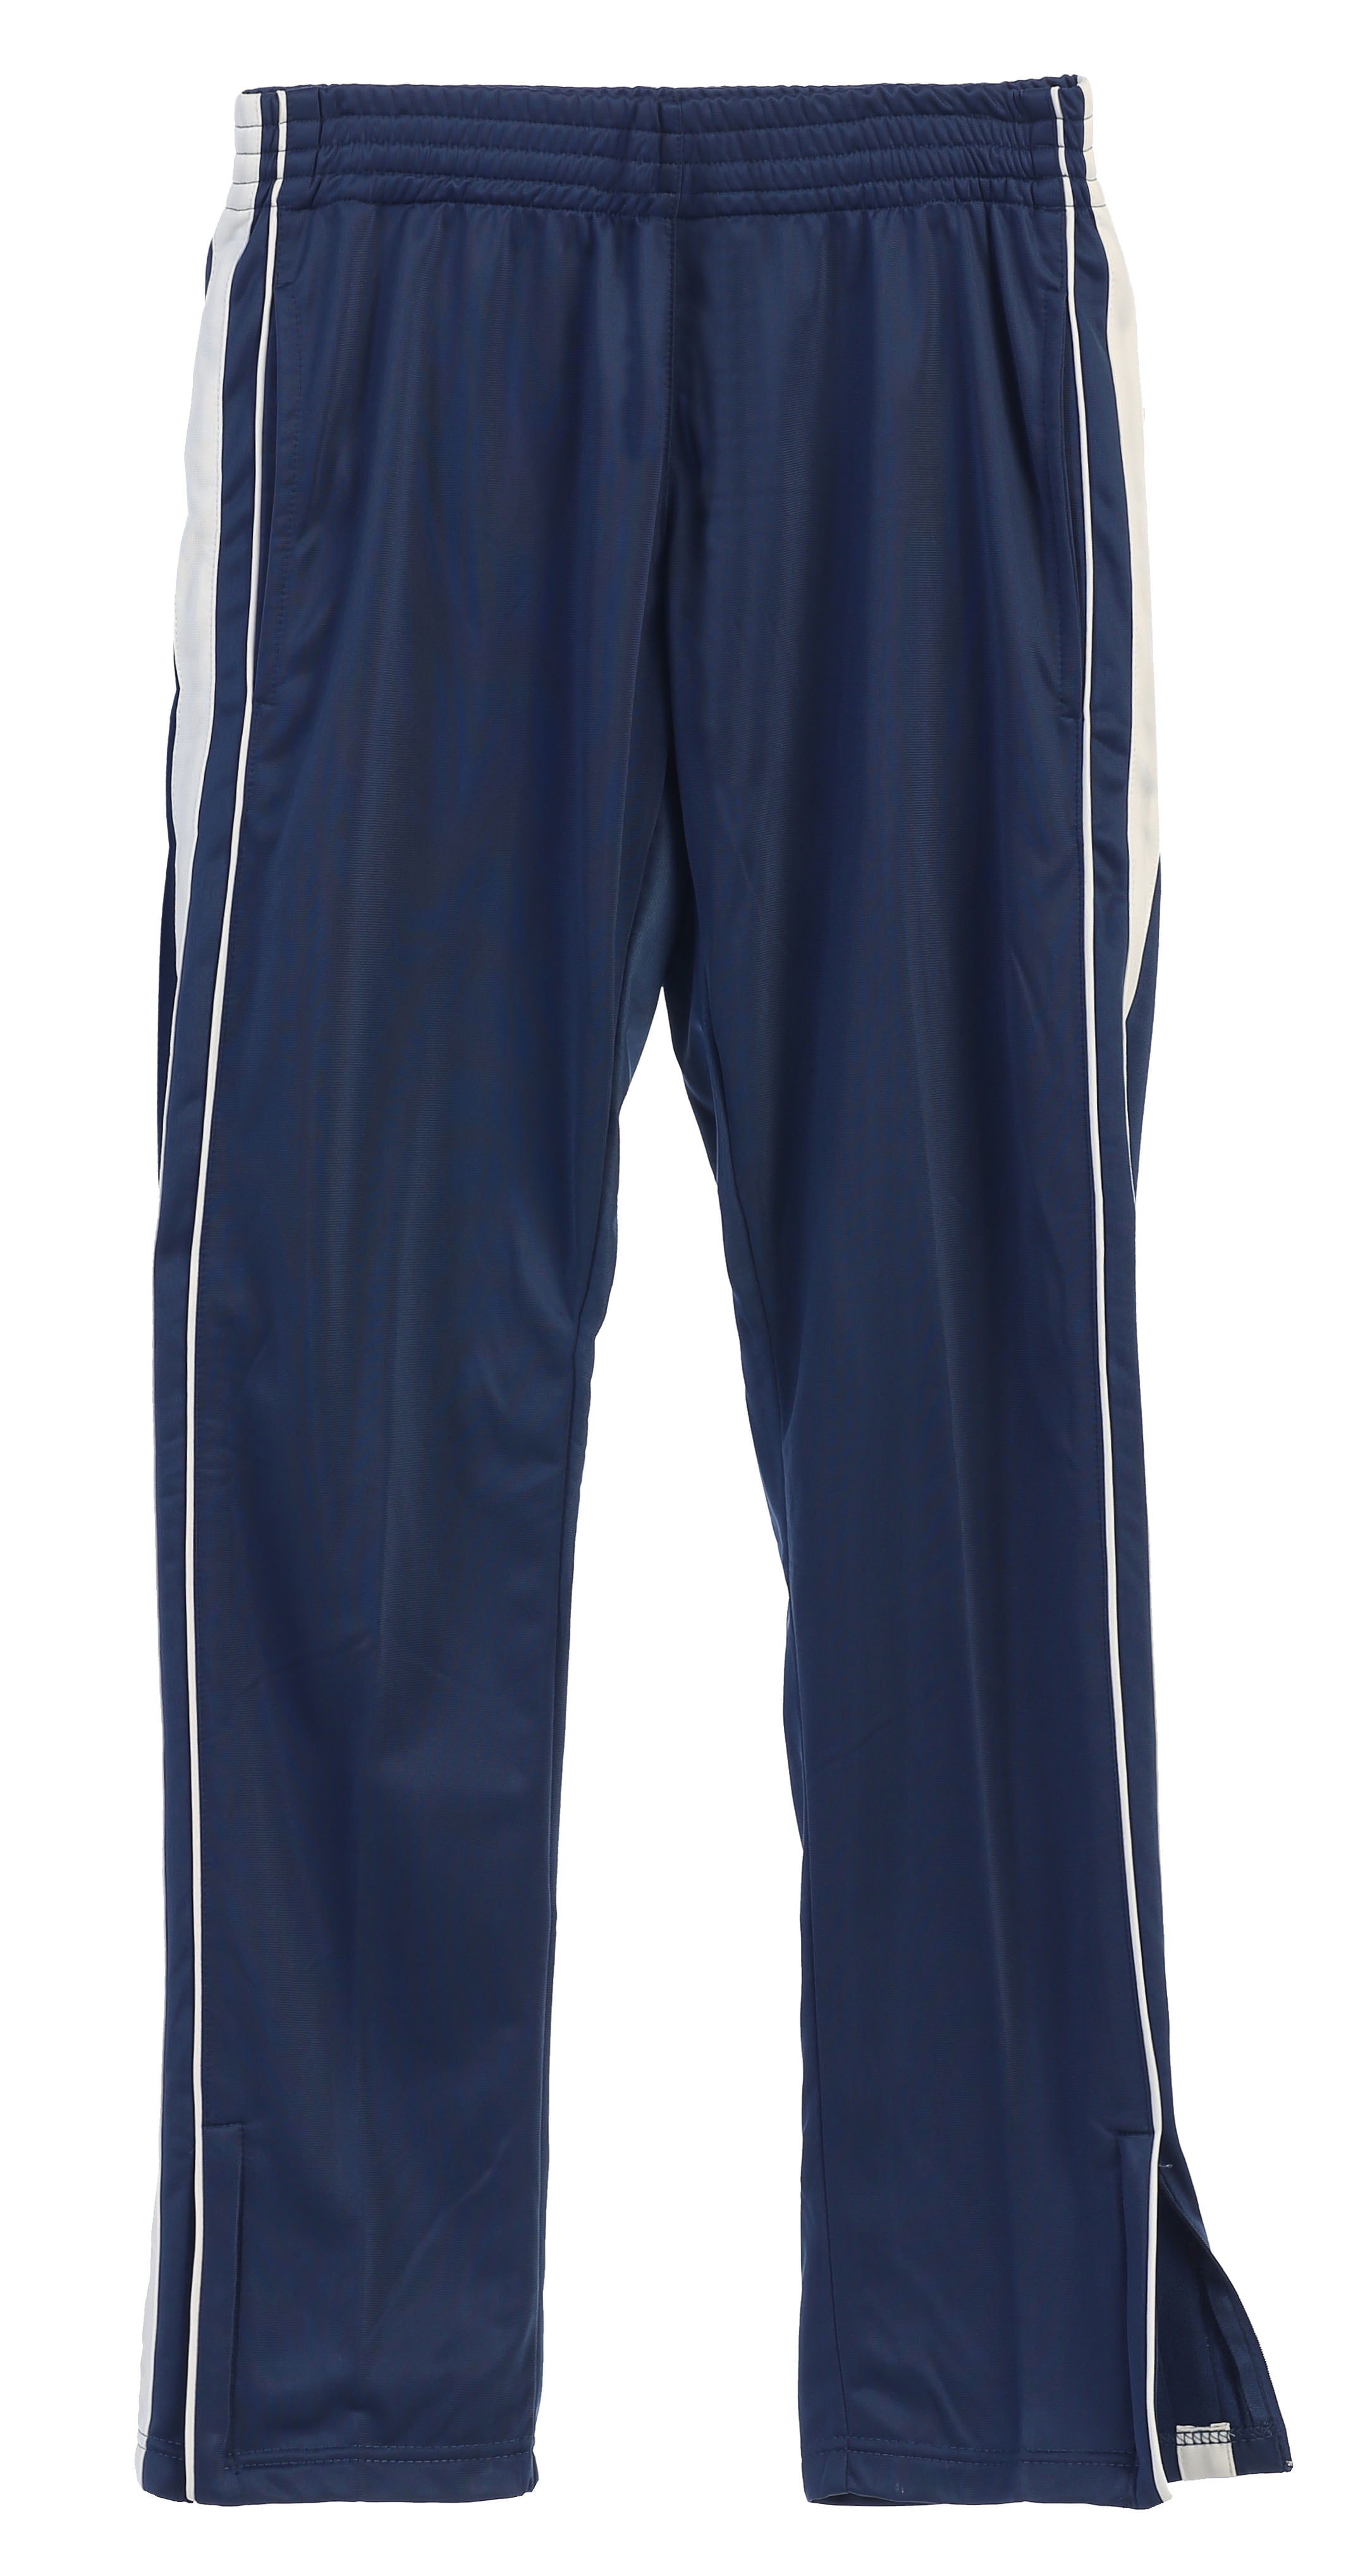 Gioberti Boys Track Jogger Athletic Pants - With Zip Bottom - Walmart.com